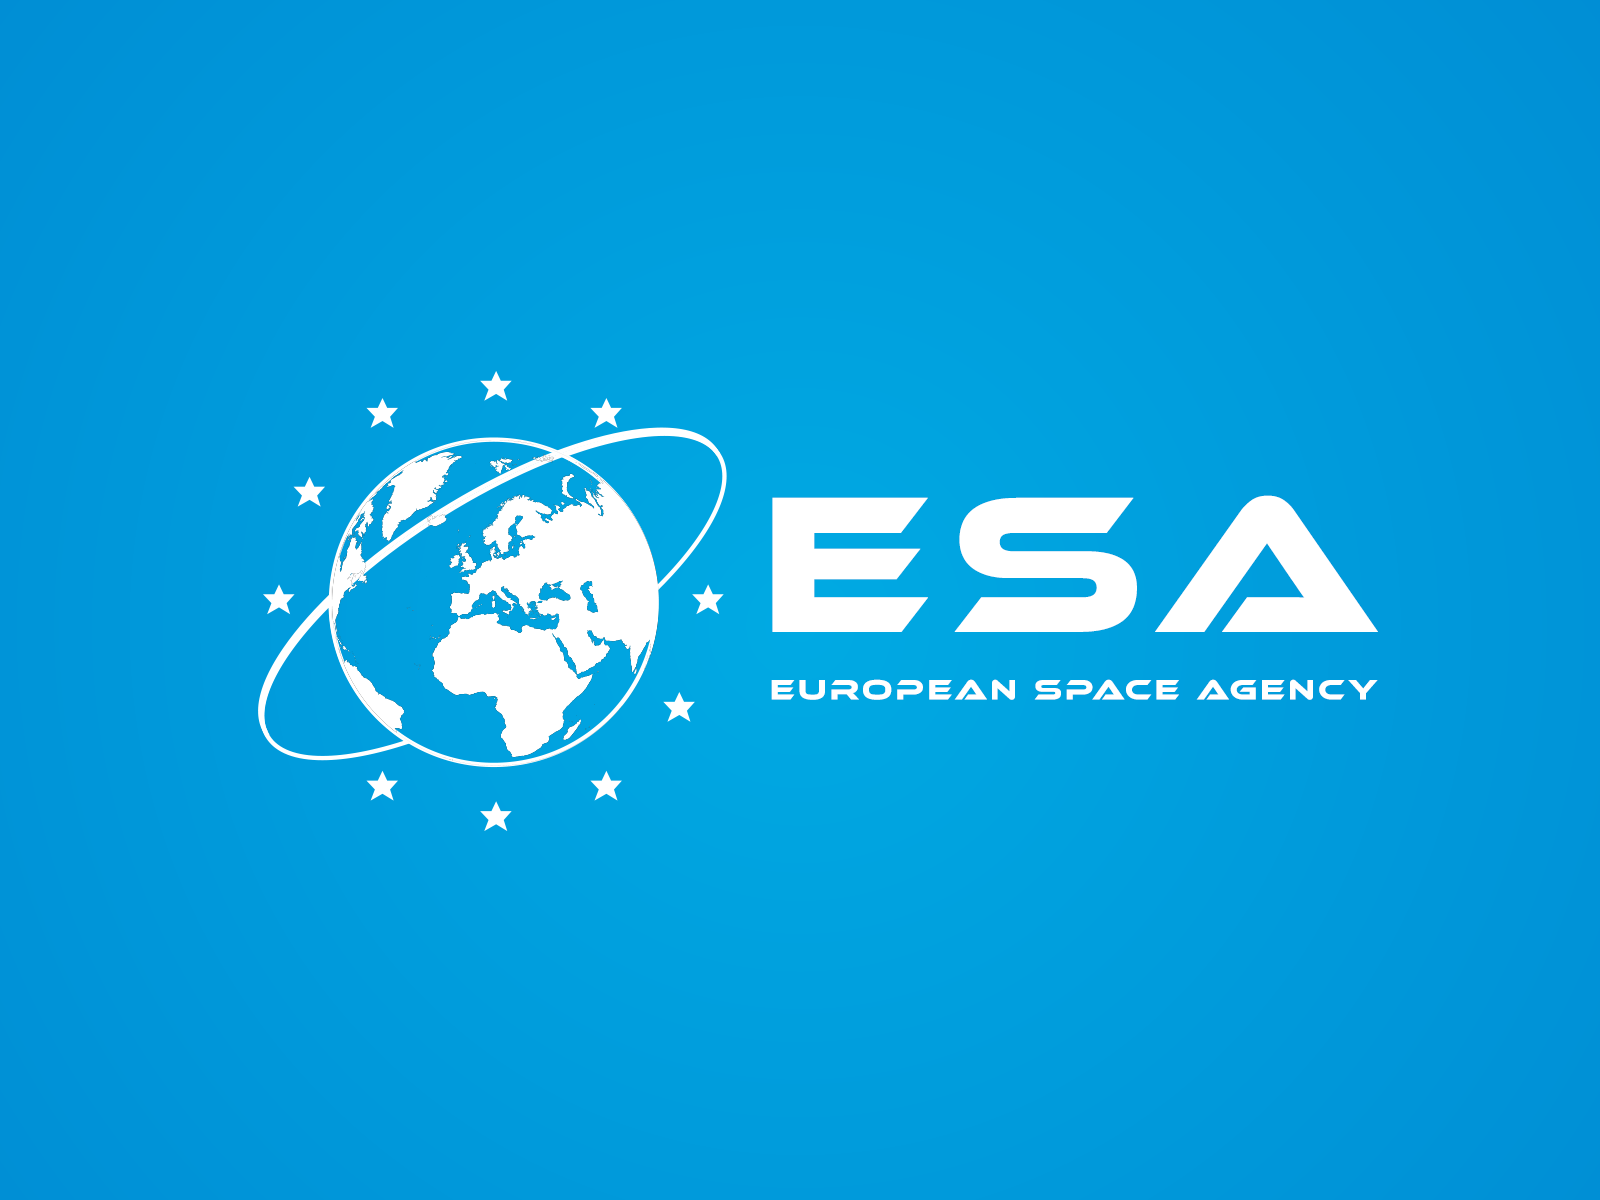 dermot-mcdonagh-projects-esa-european-space-agency-rebrand-dribbble